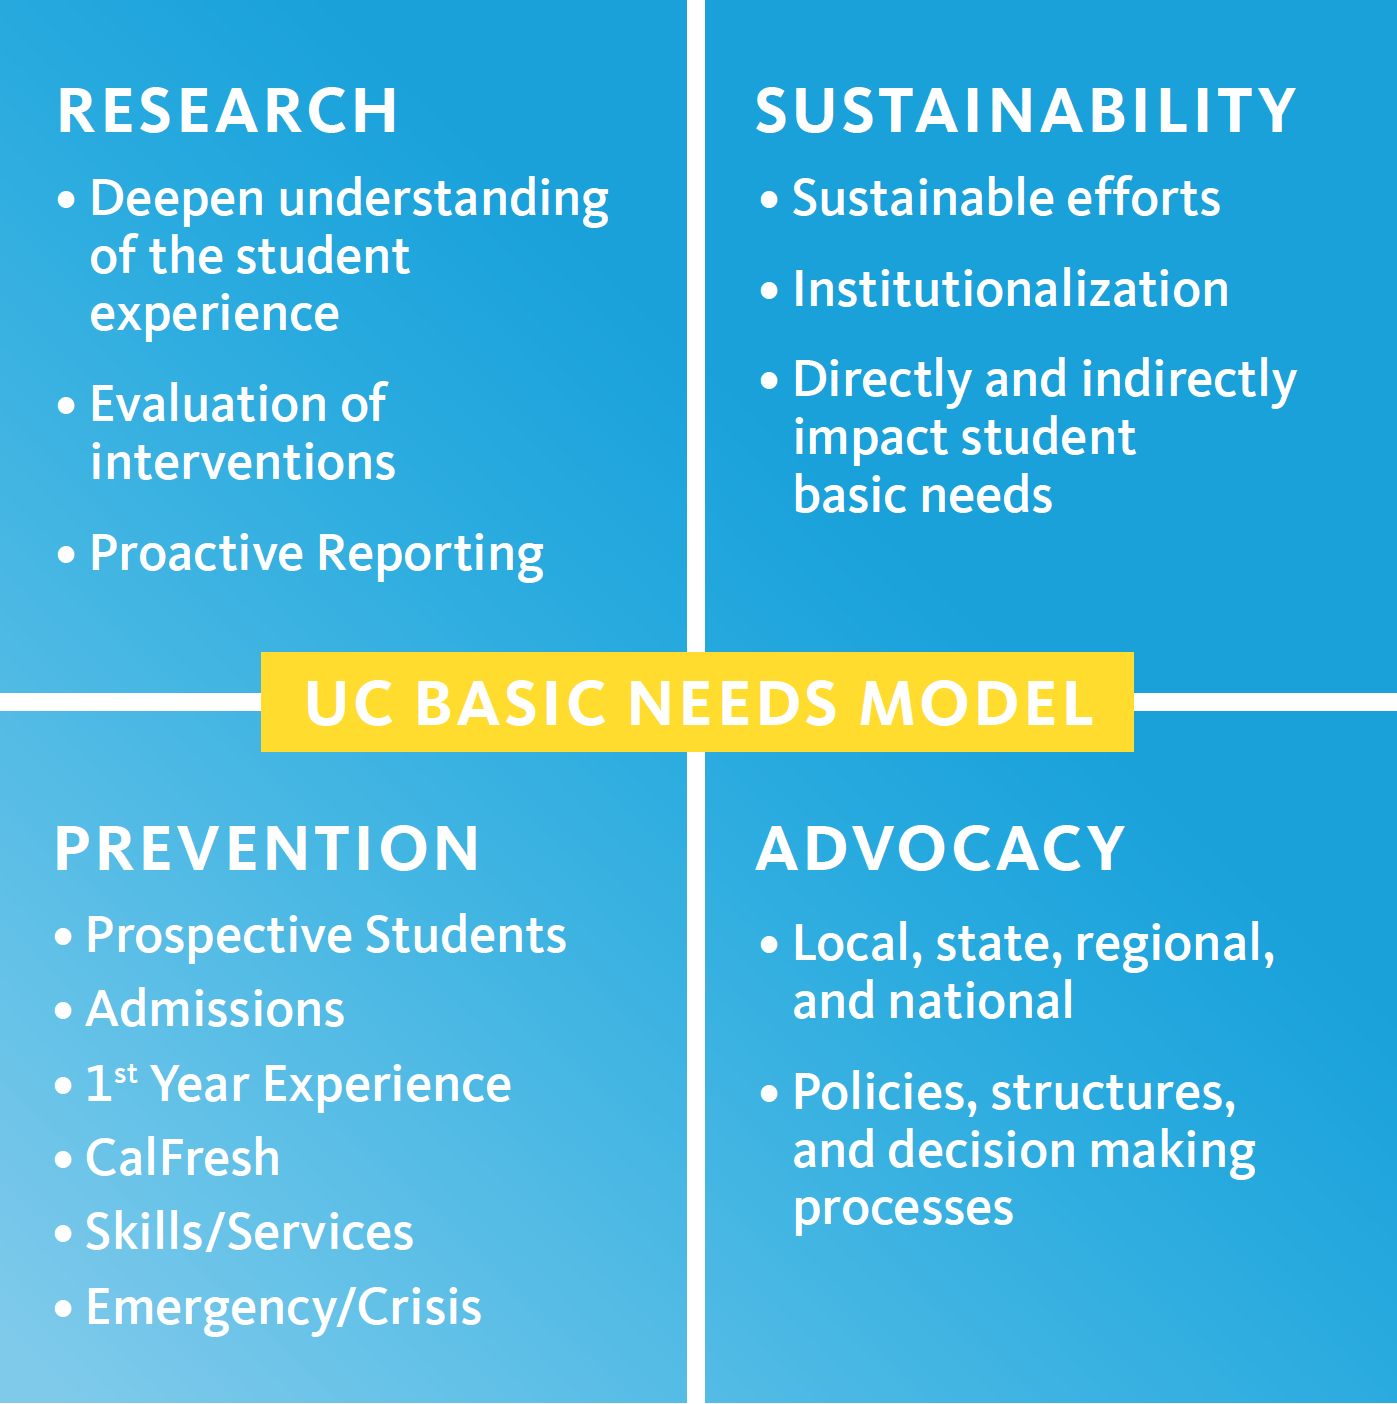 The UC Basic Needs Model, divided into quadrants